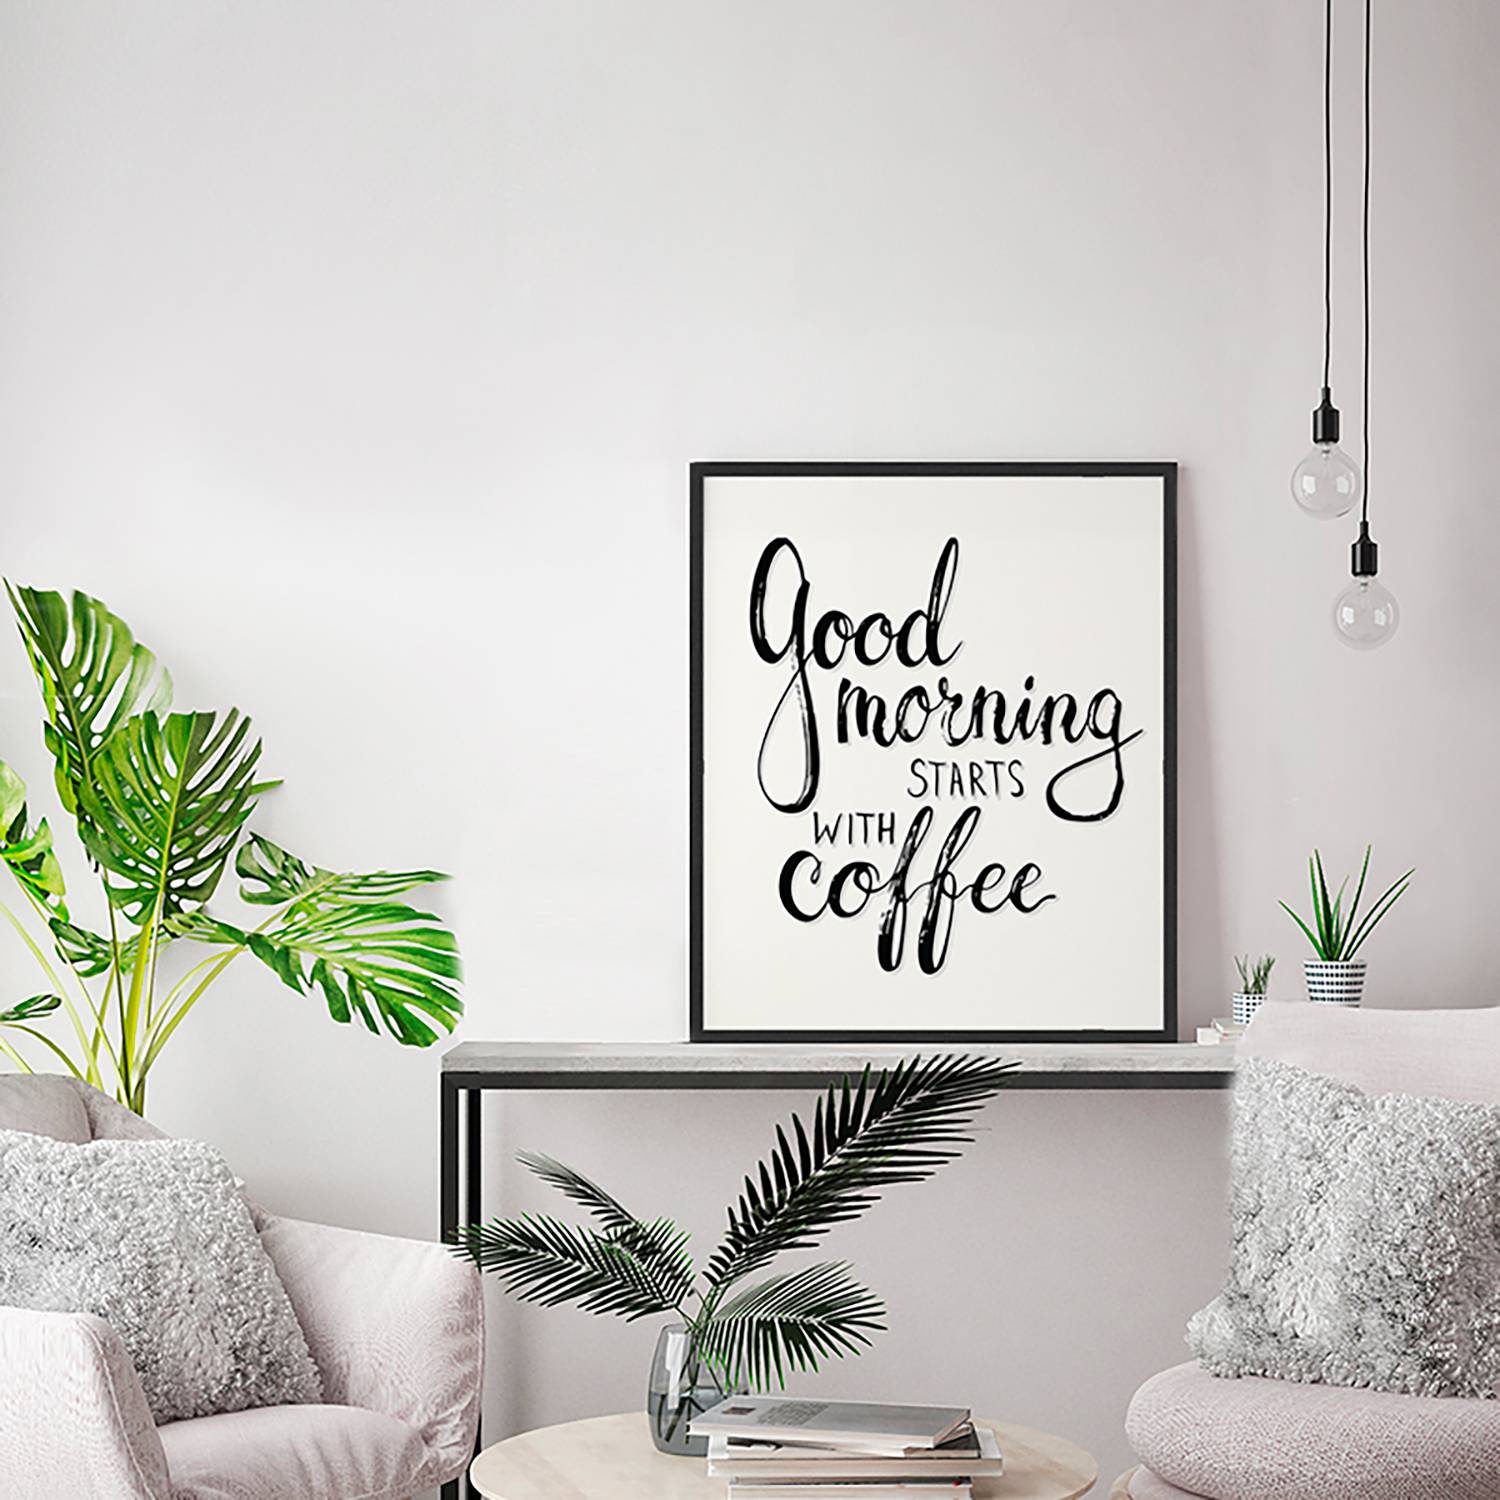 Bild Good morning starts with coffee 